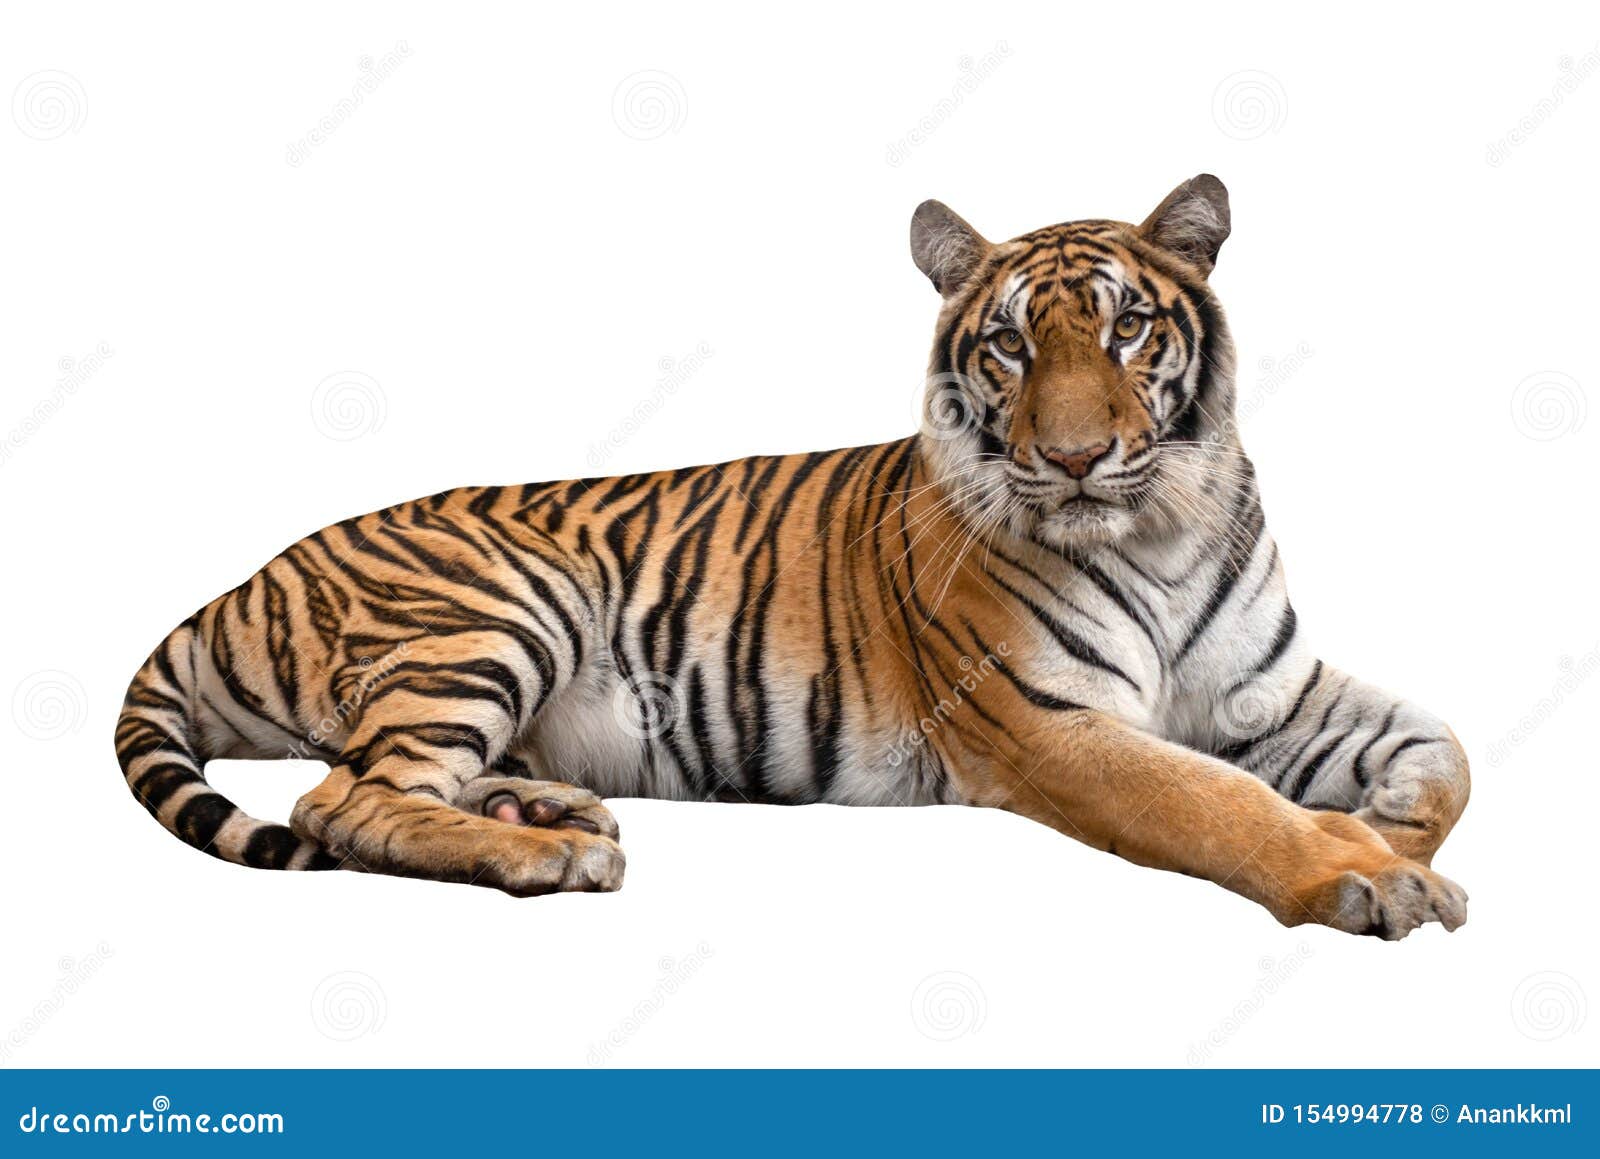 female bengal tiger lying 